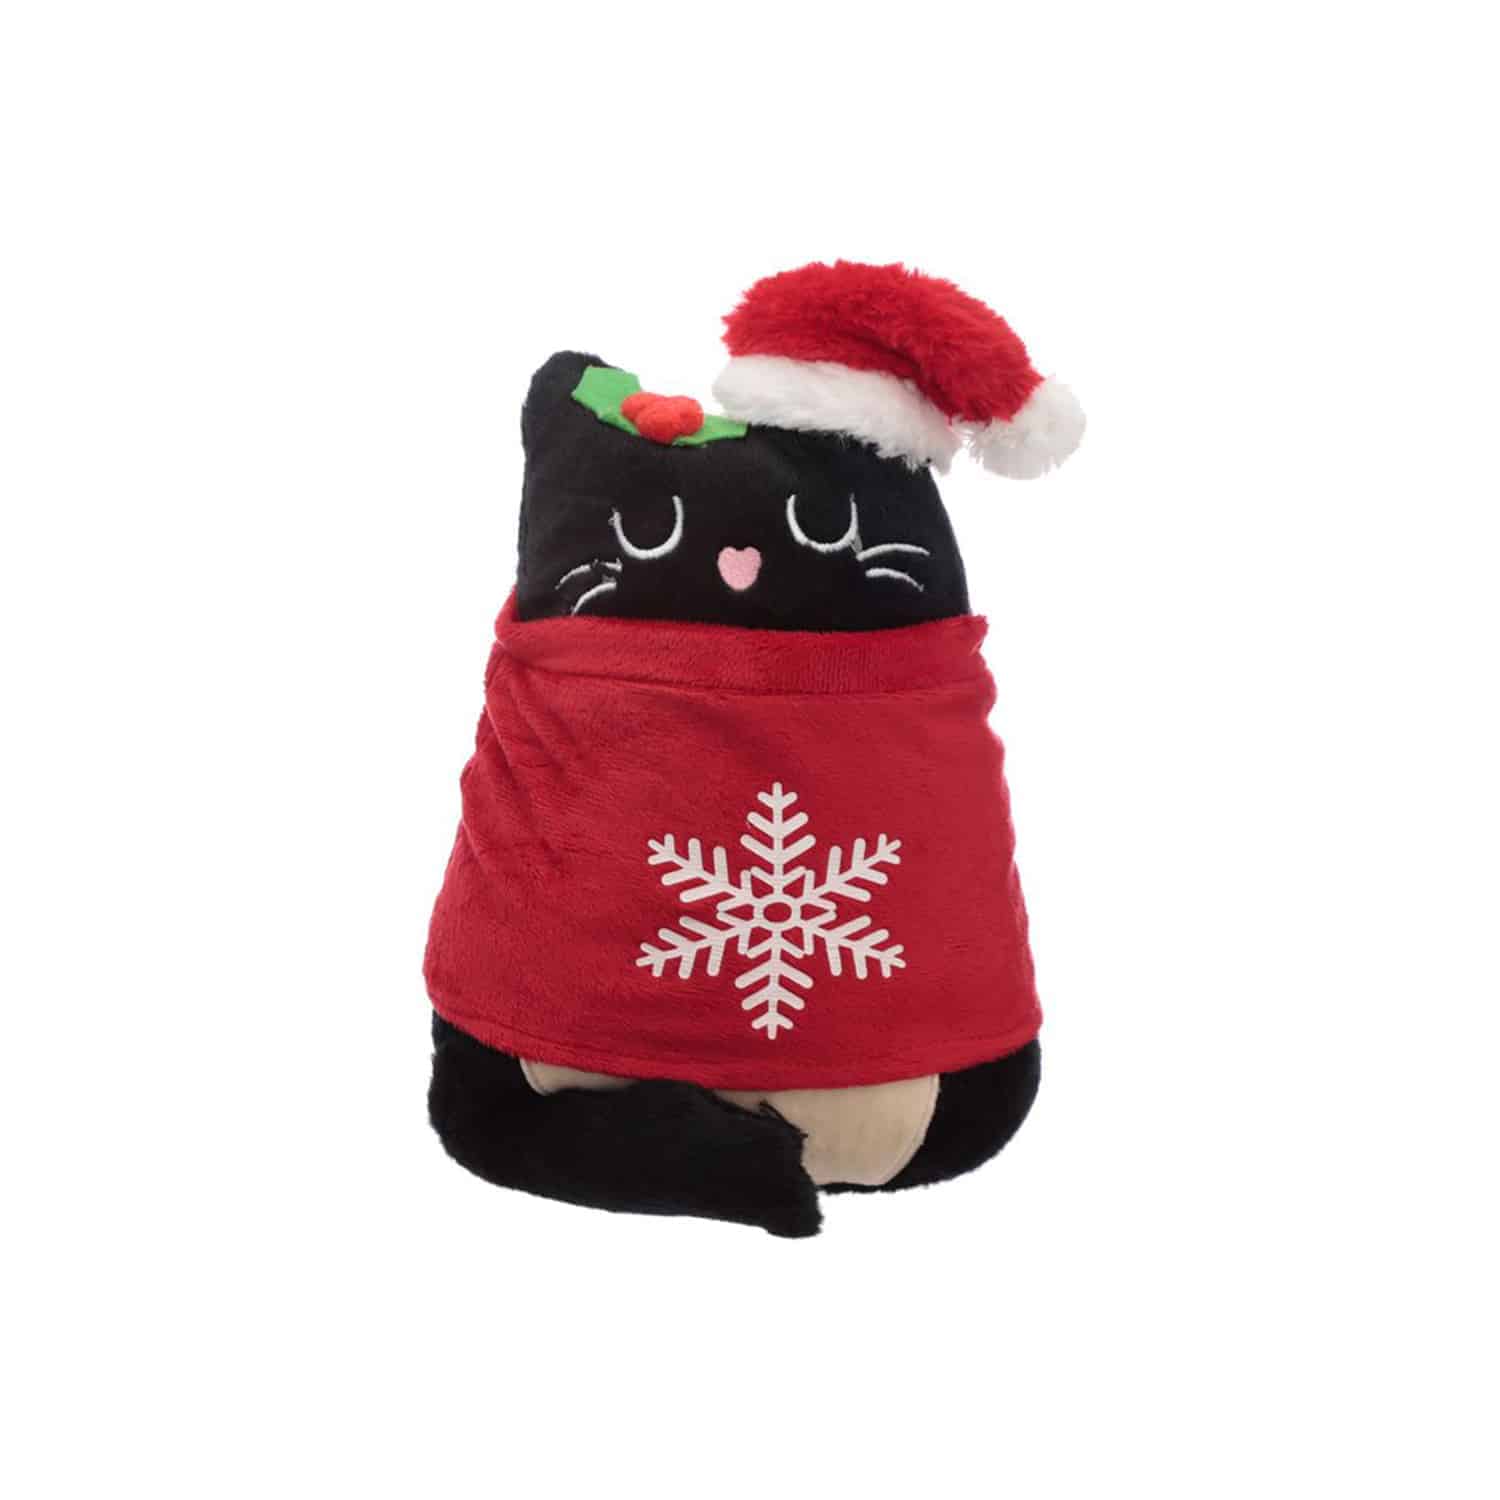 Feline Festice Christmas Cat Doorstop Plush